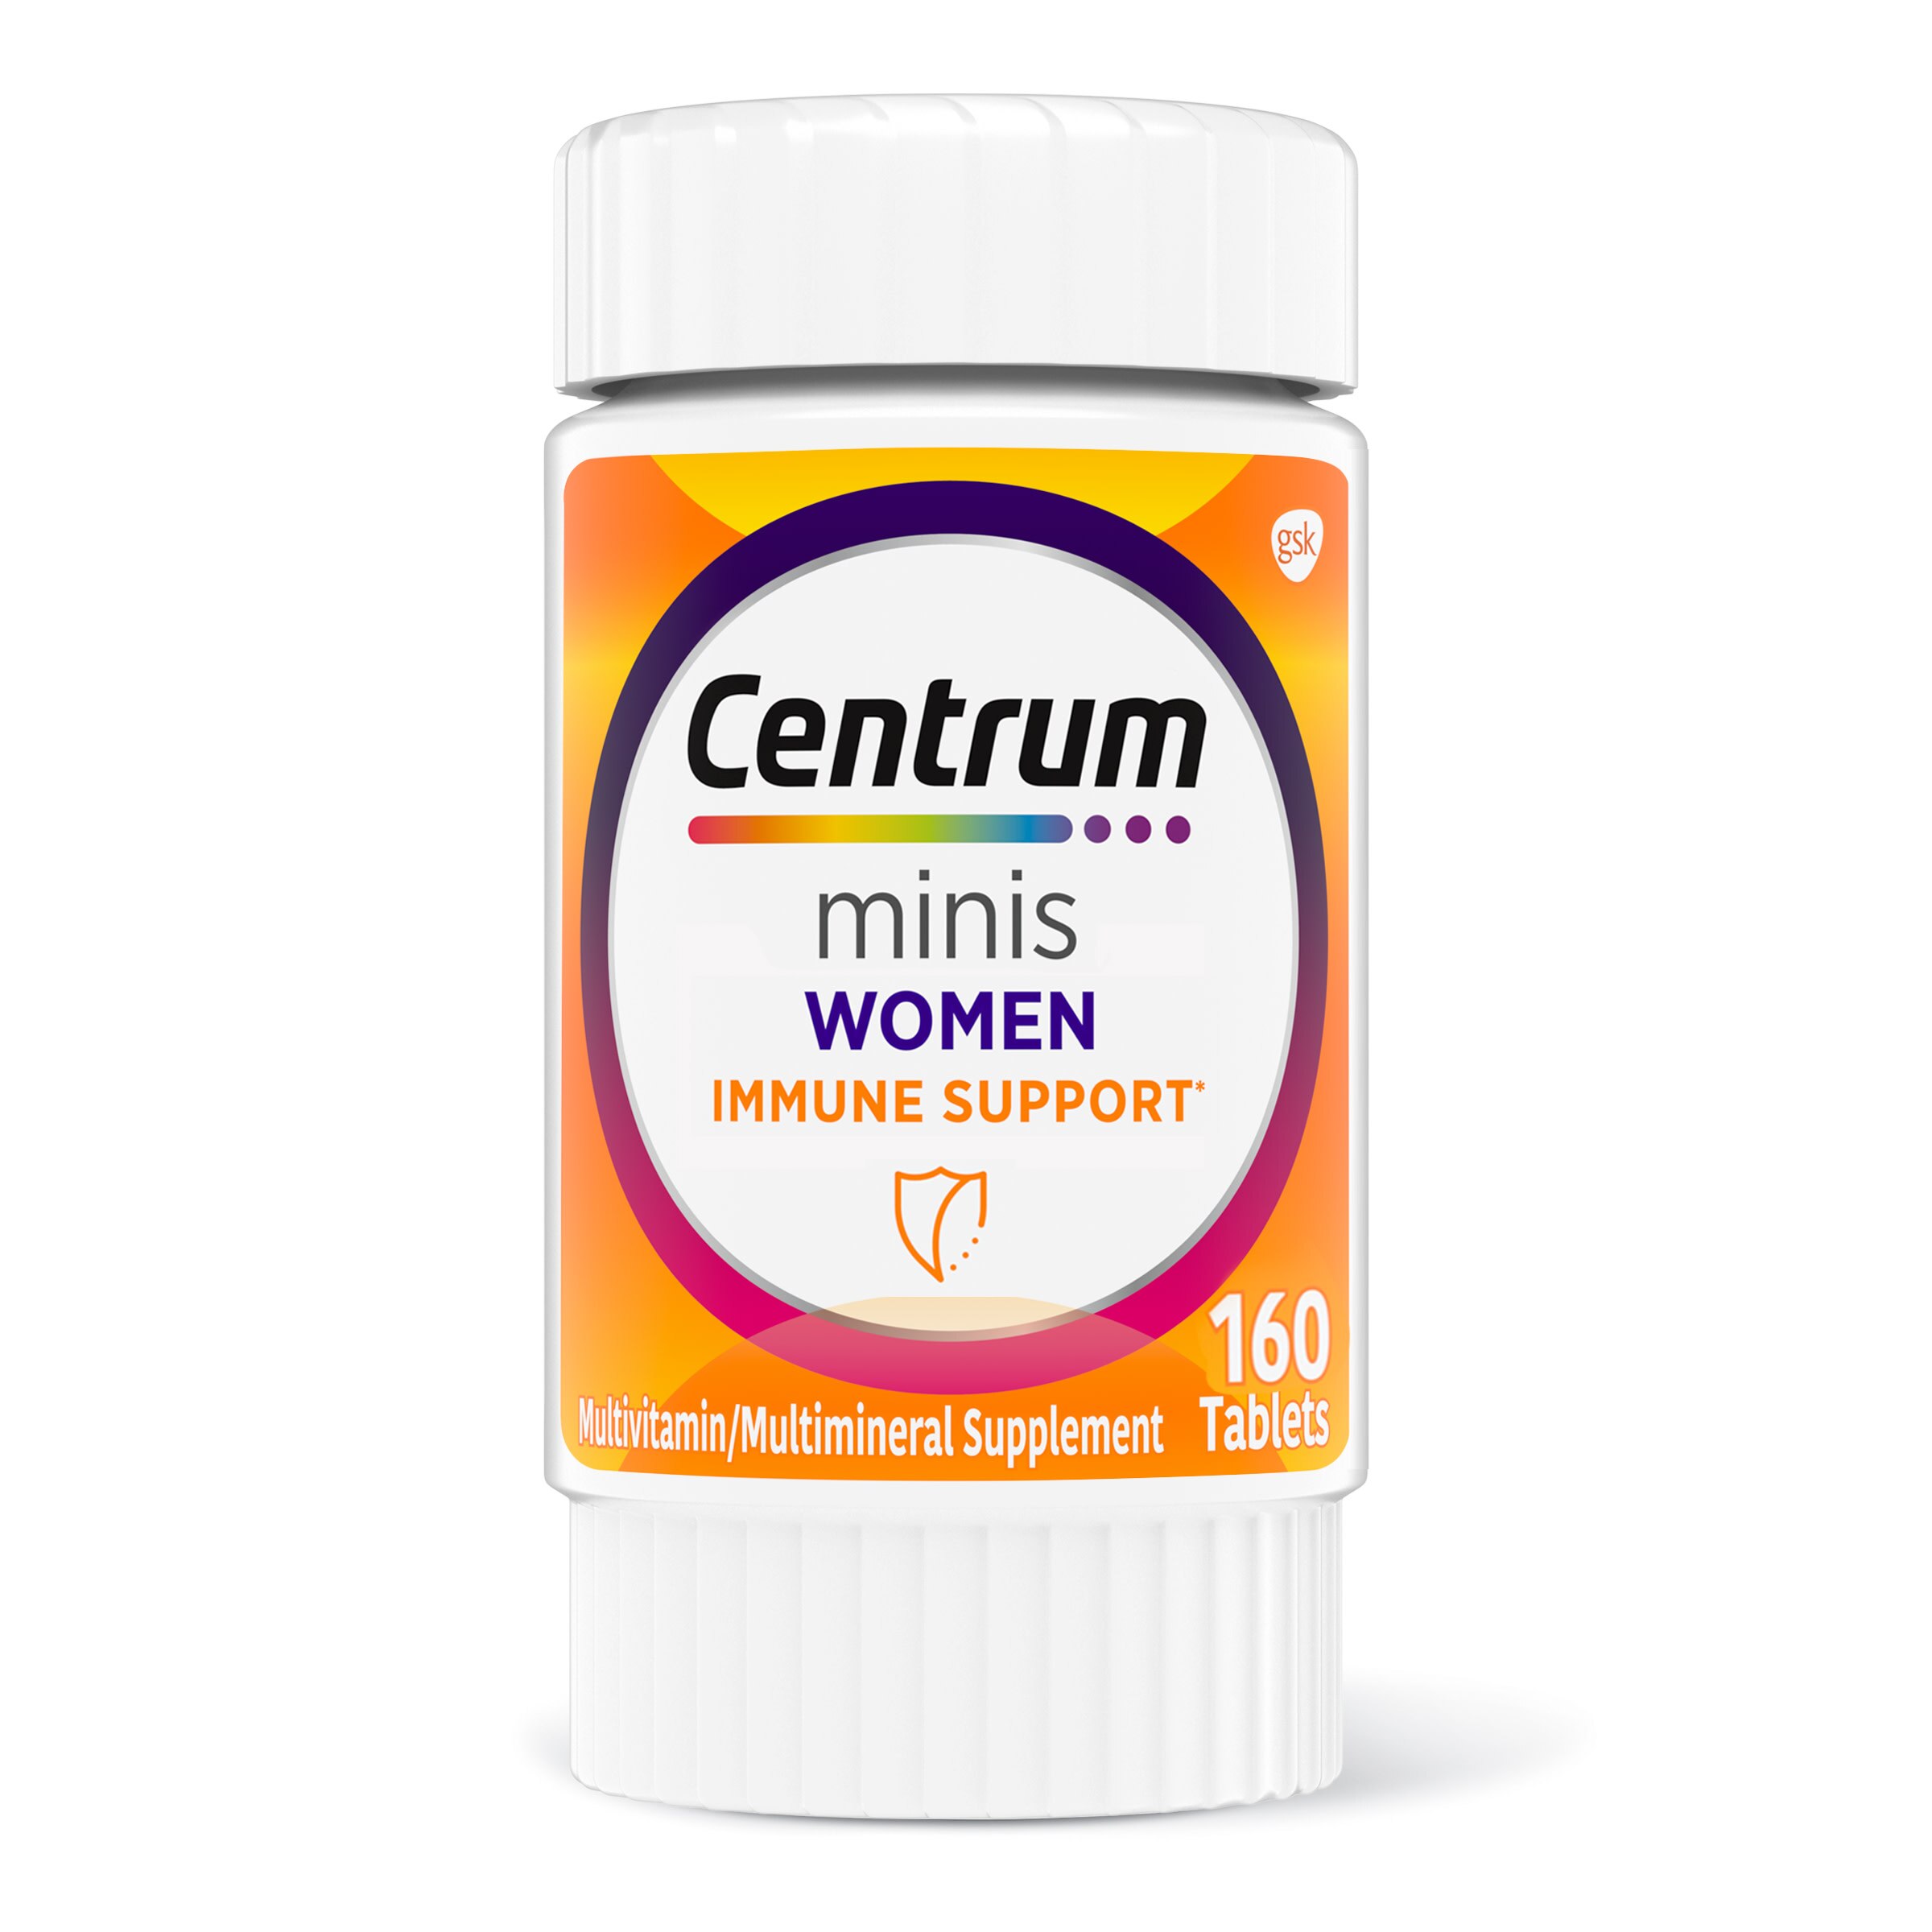 Centrum Minis Women Immune Support Tablets, Complete Multivitamin for Women, 160 CT